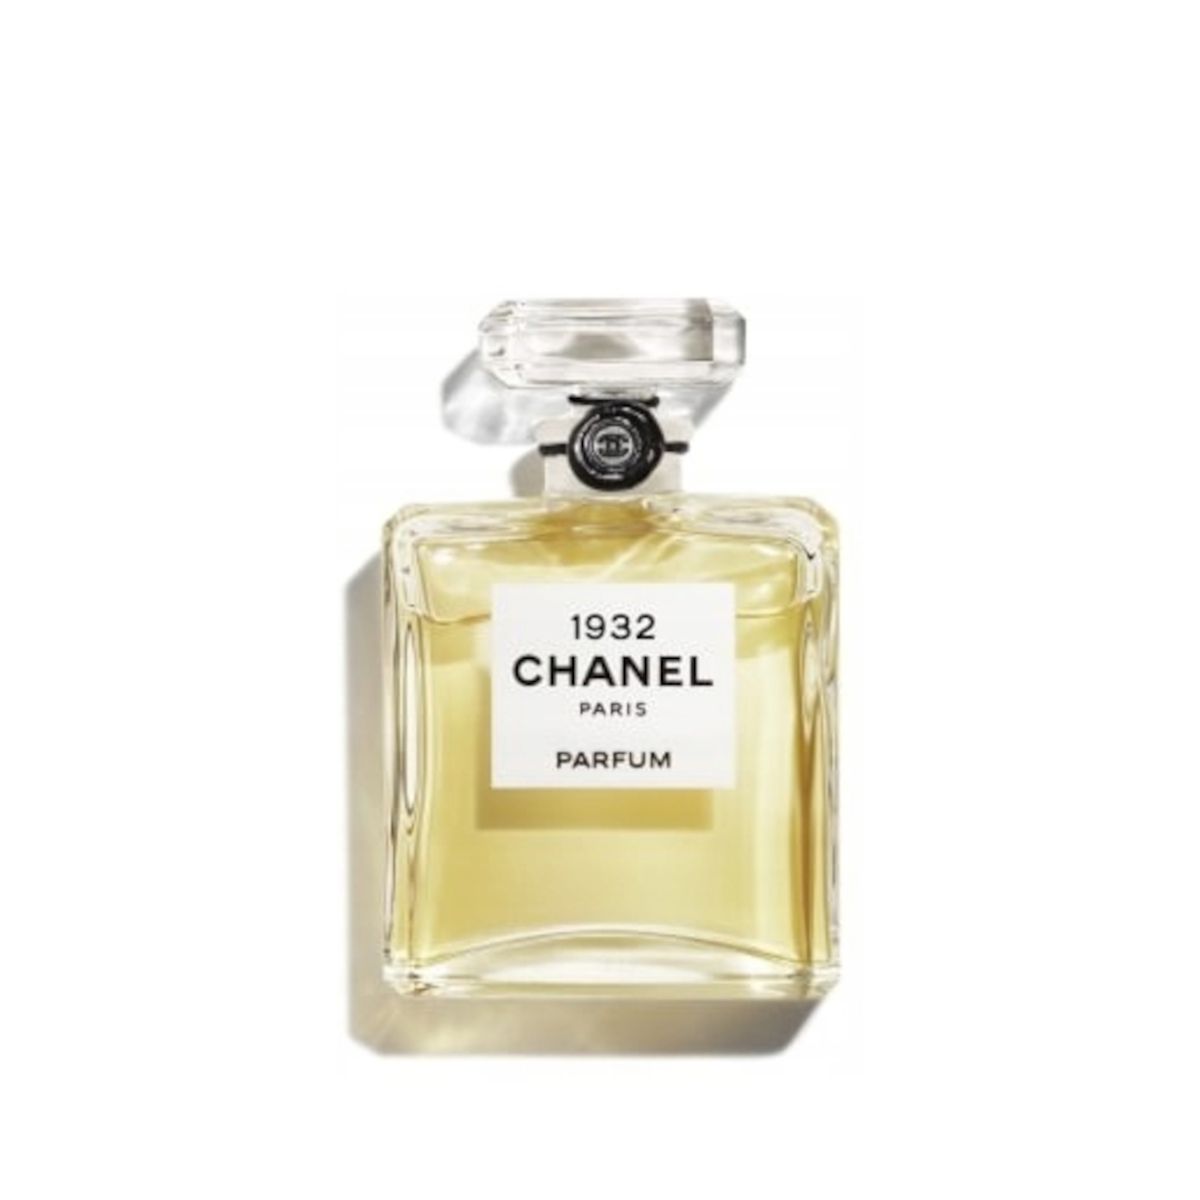 Chanel 1932 Parfum 15ml